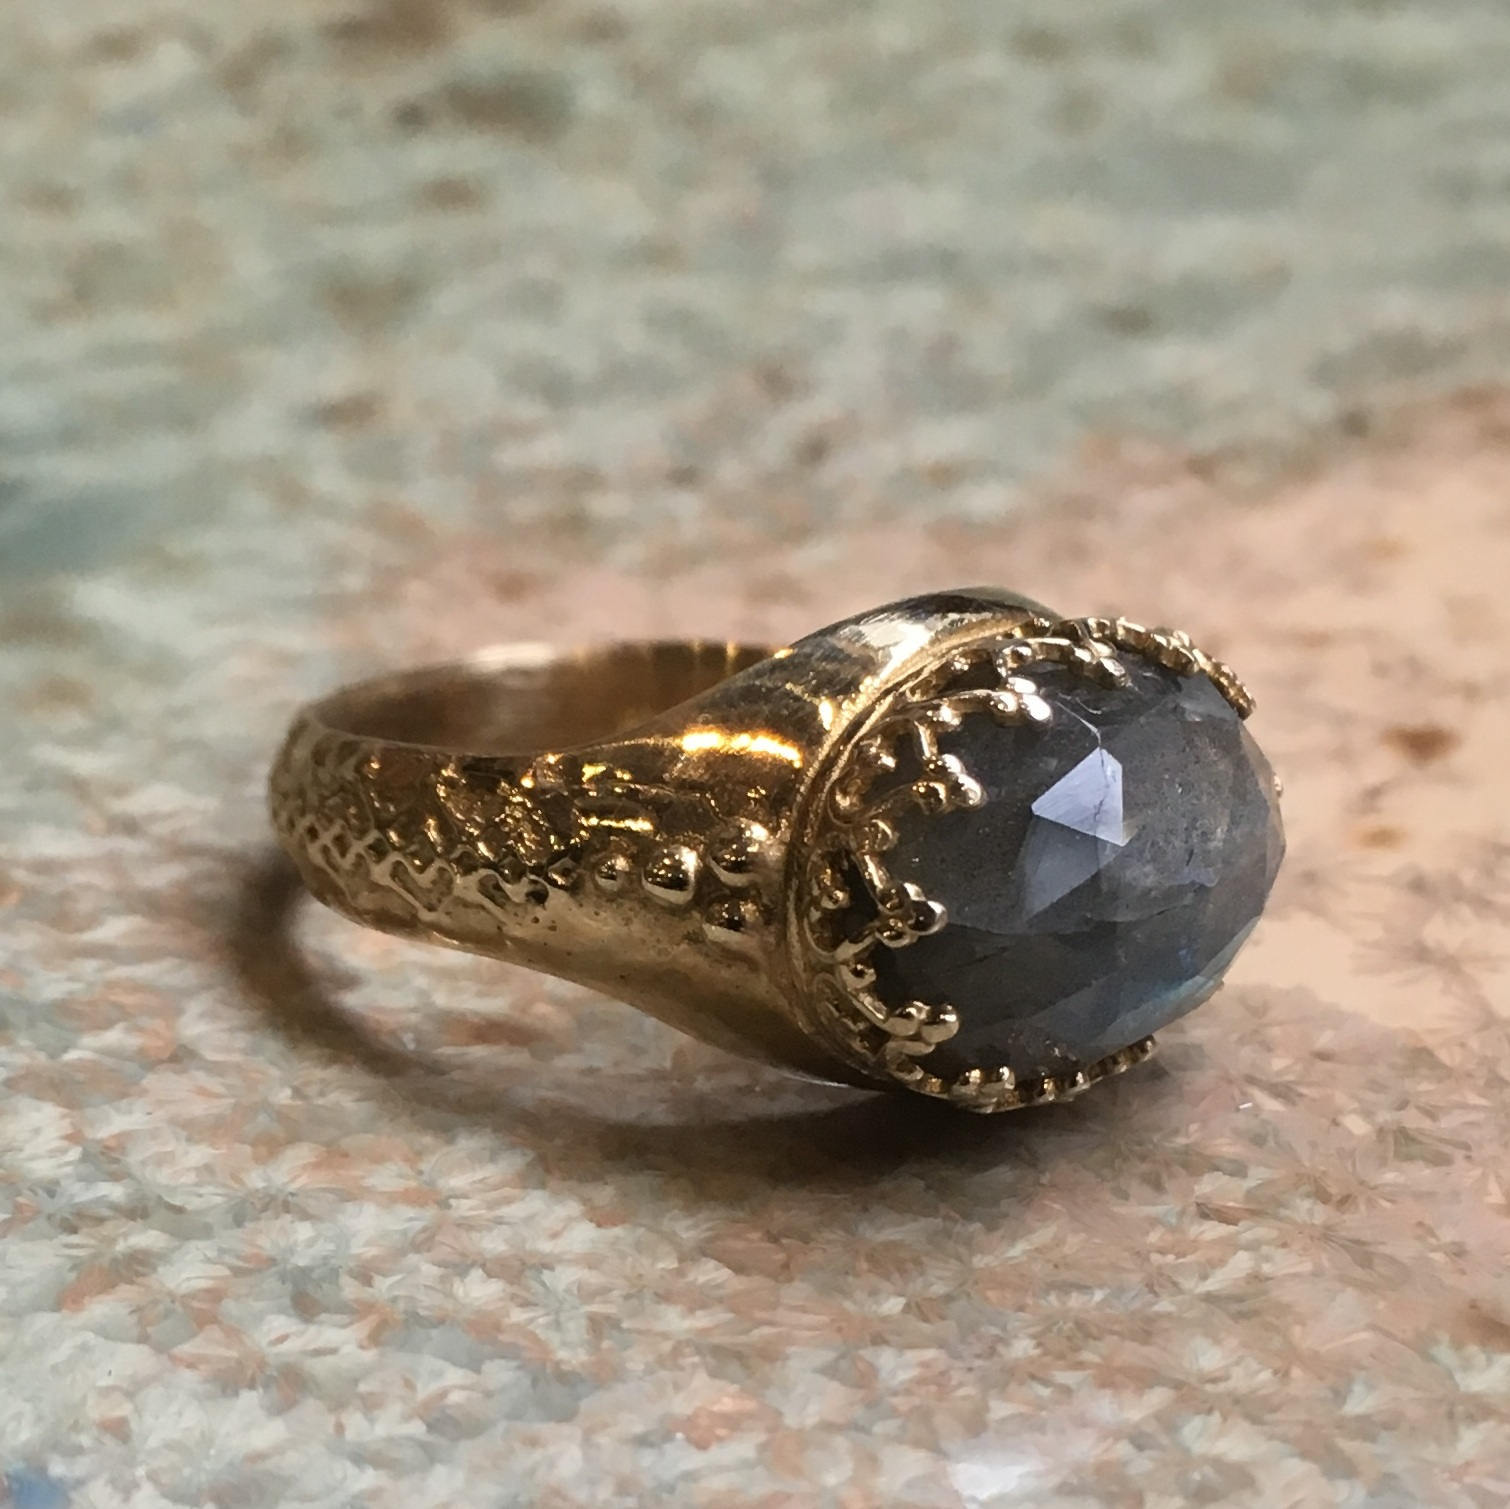 Solid Gold Ring, Crown Ring, Gemstone ring, oval Labradorite Ring, green Stone Ring, engagement ring, Royal ring - I believe RG2052 -1